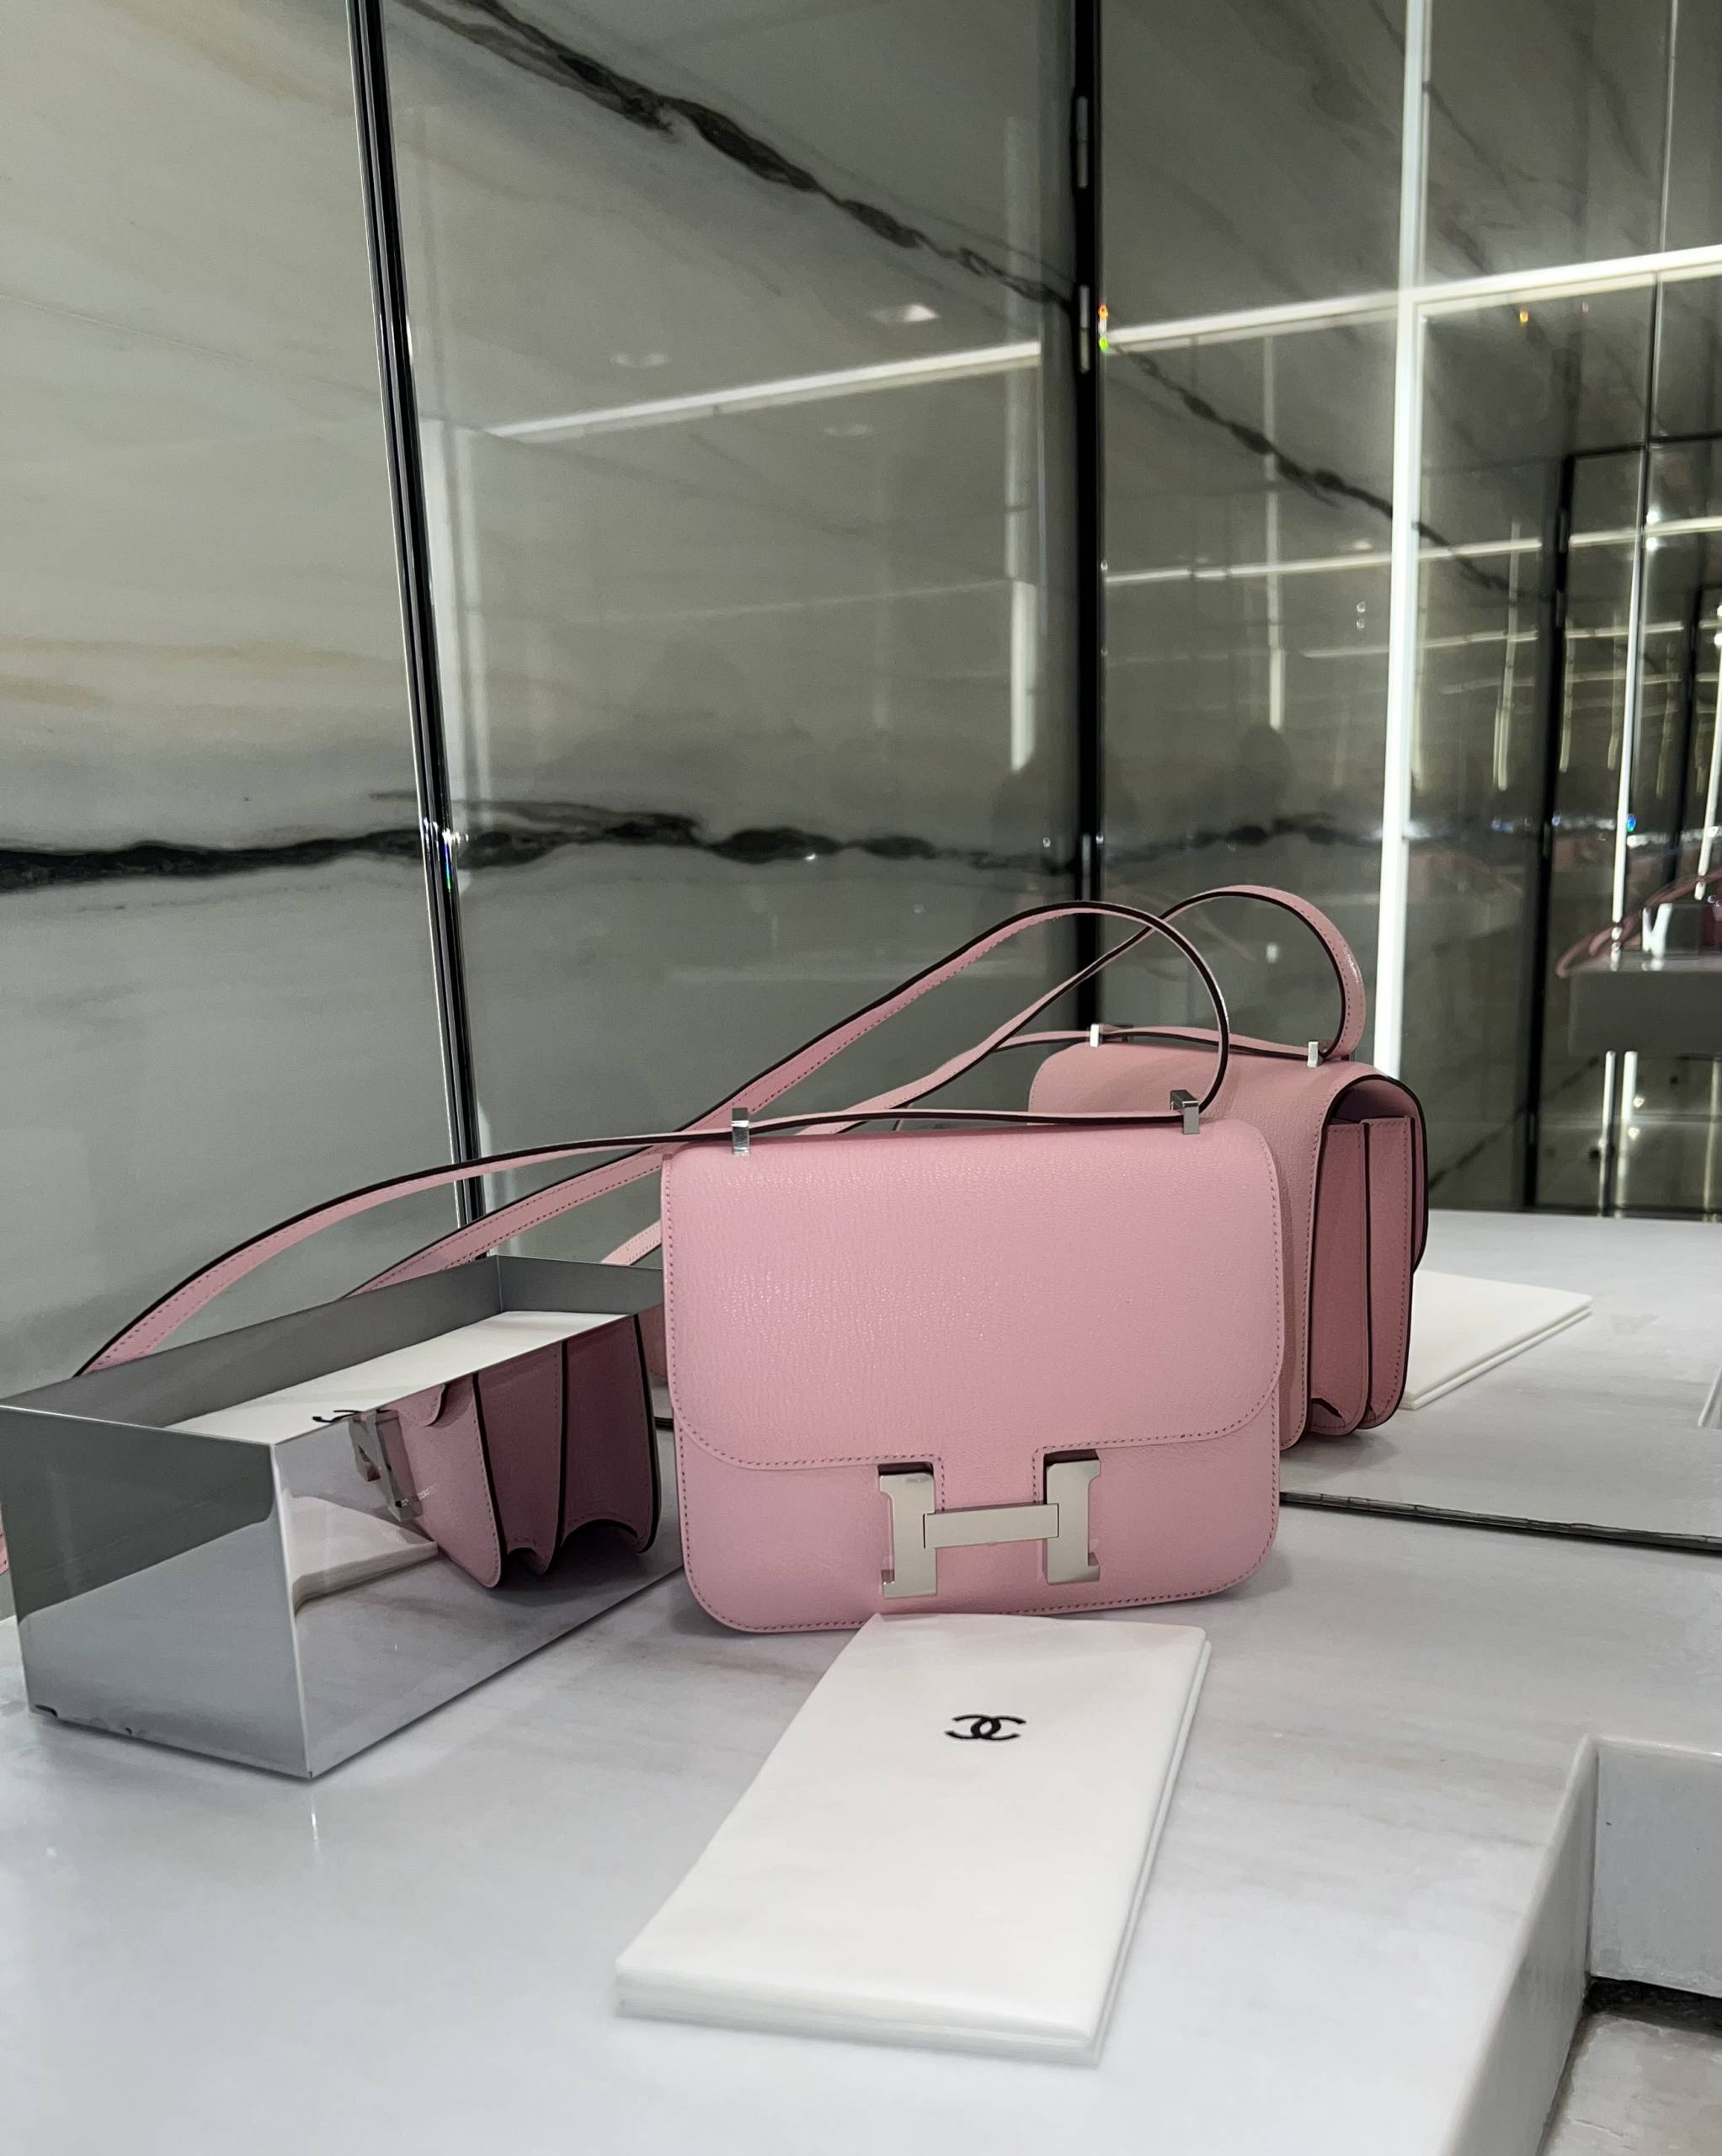 Hermès Paris Dreams Become Reality for These Friends - PurseBop